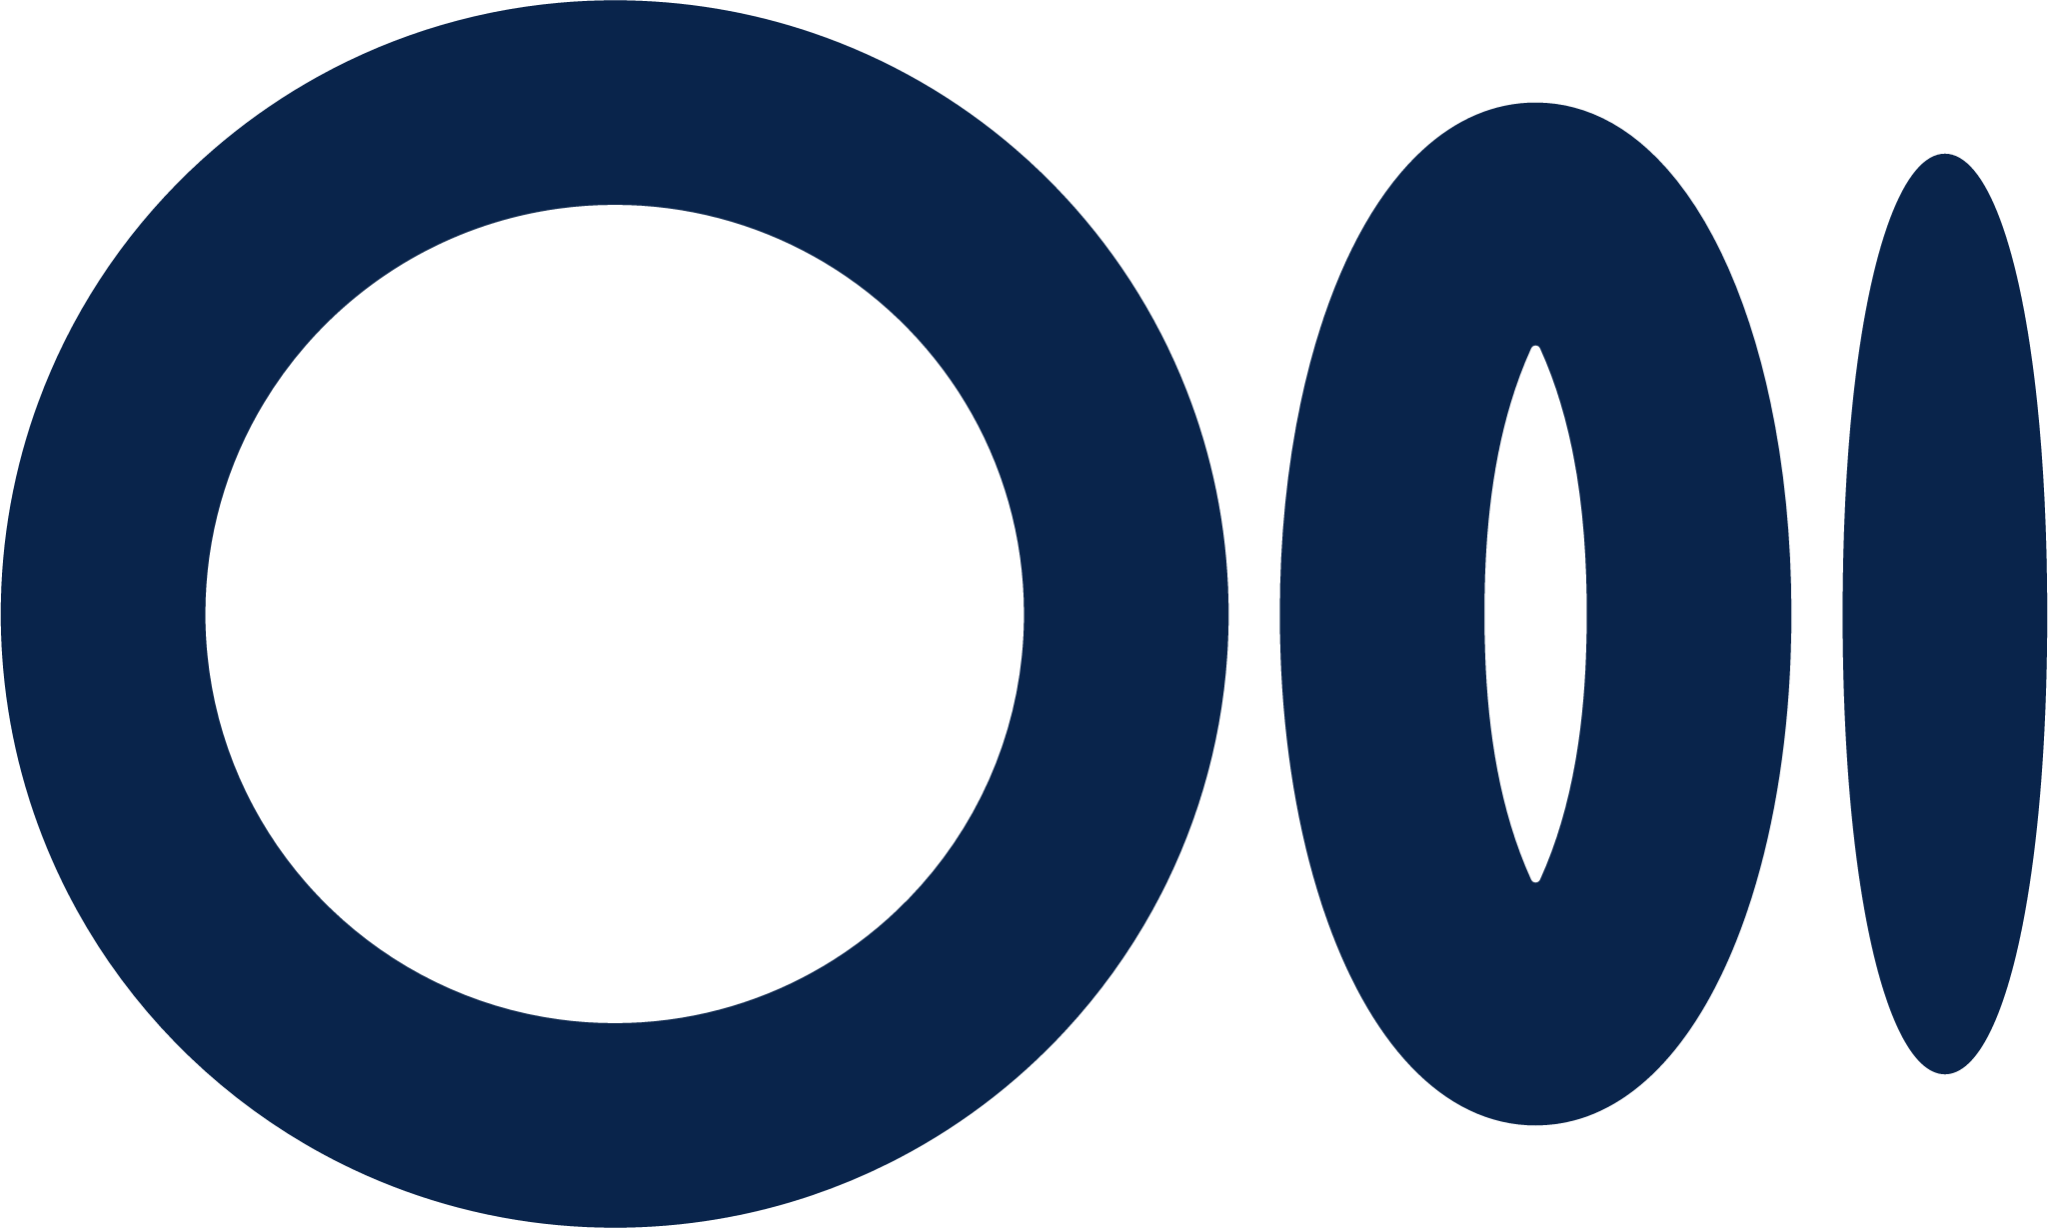 medium line logo icon